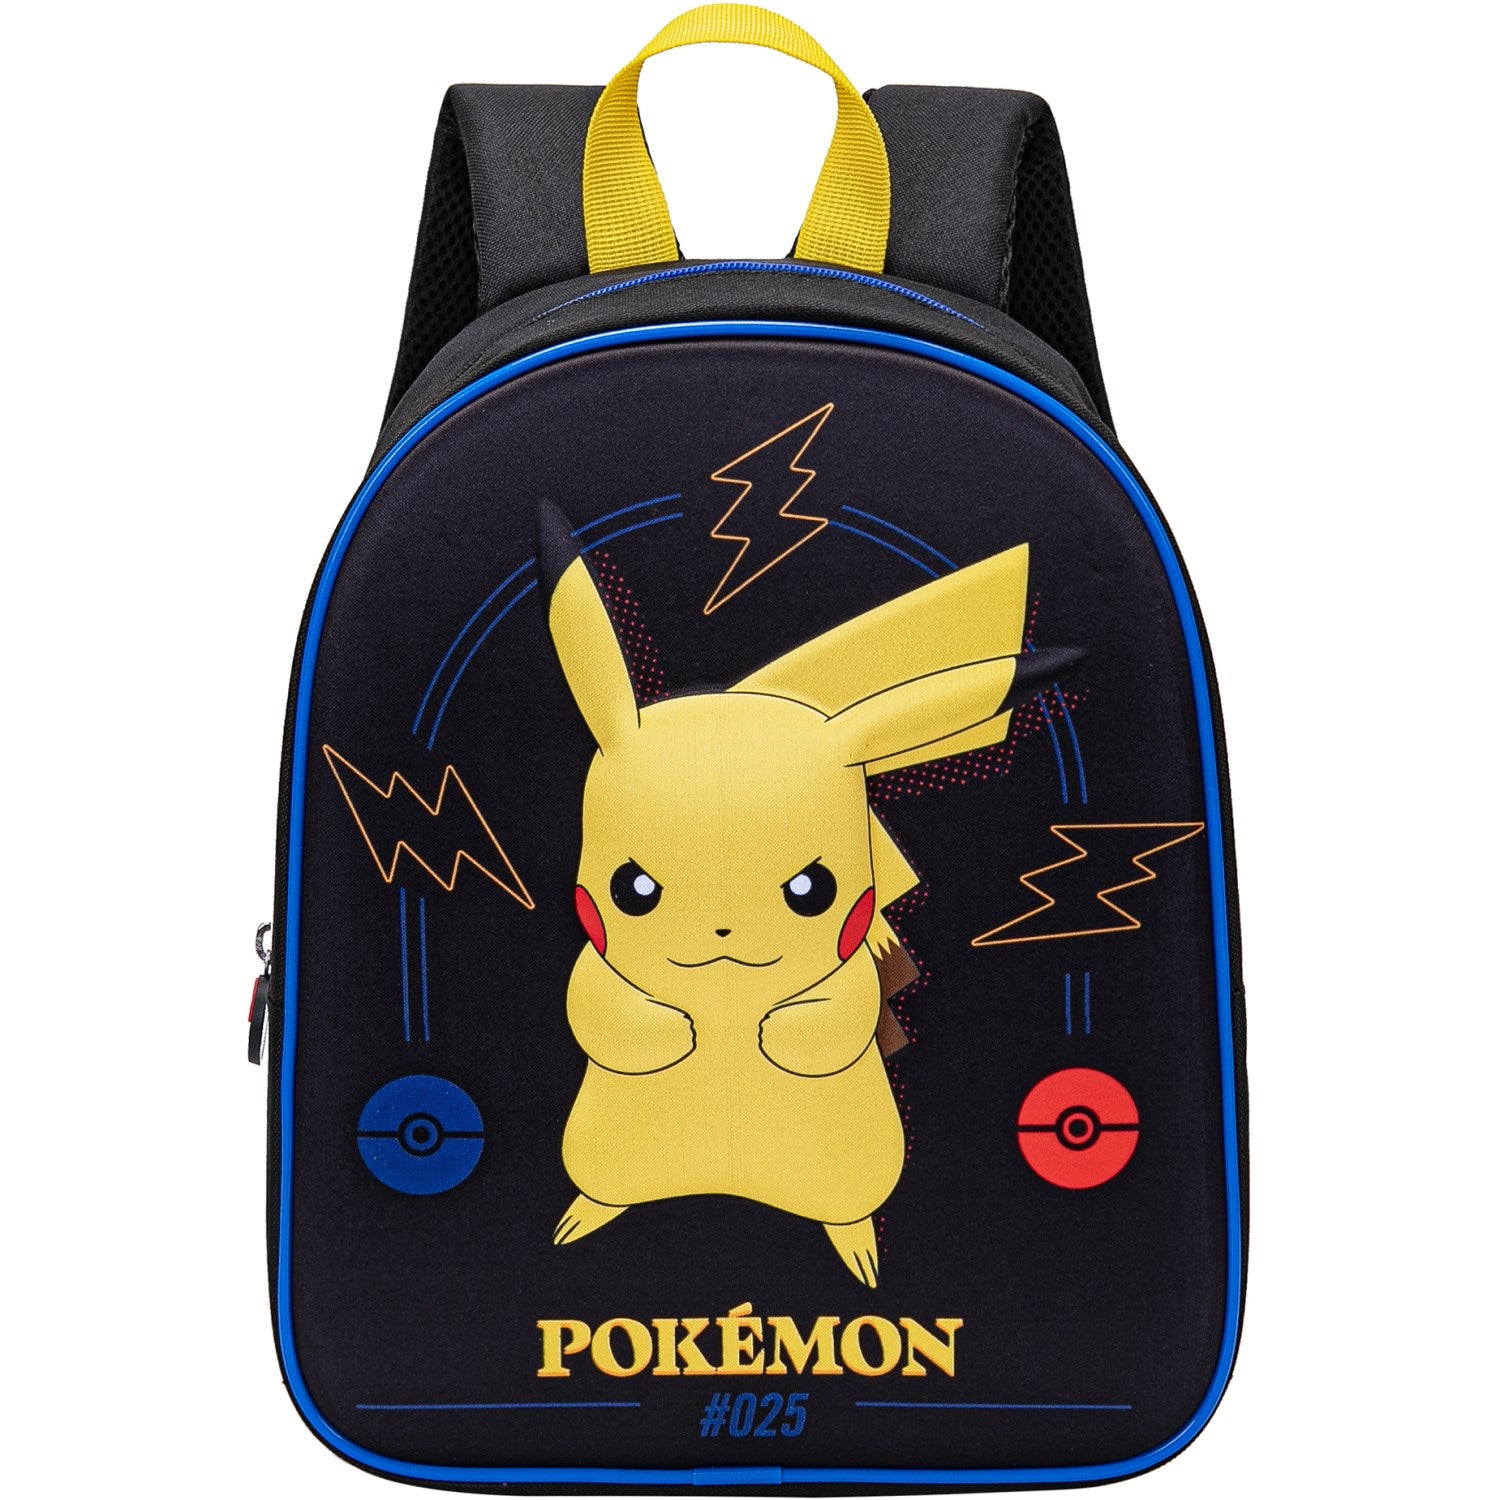 Euromic Pokémon Junior Backpack 4